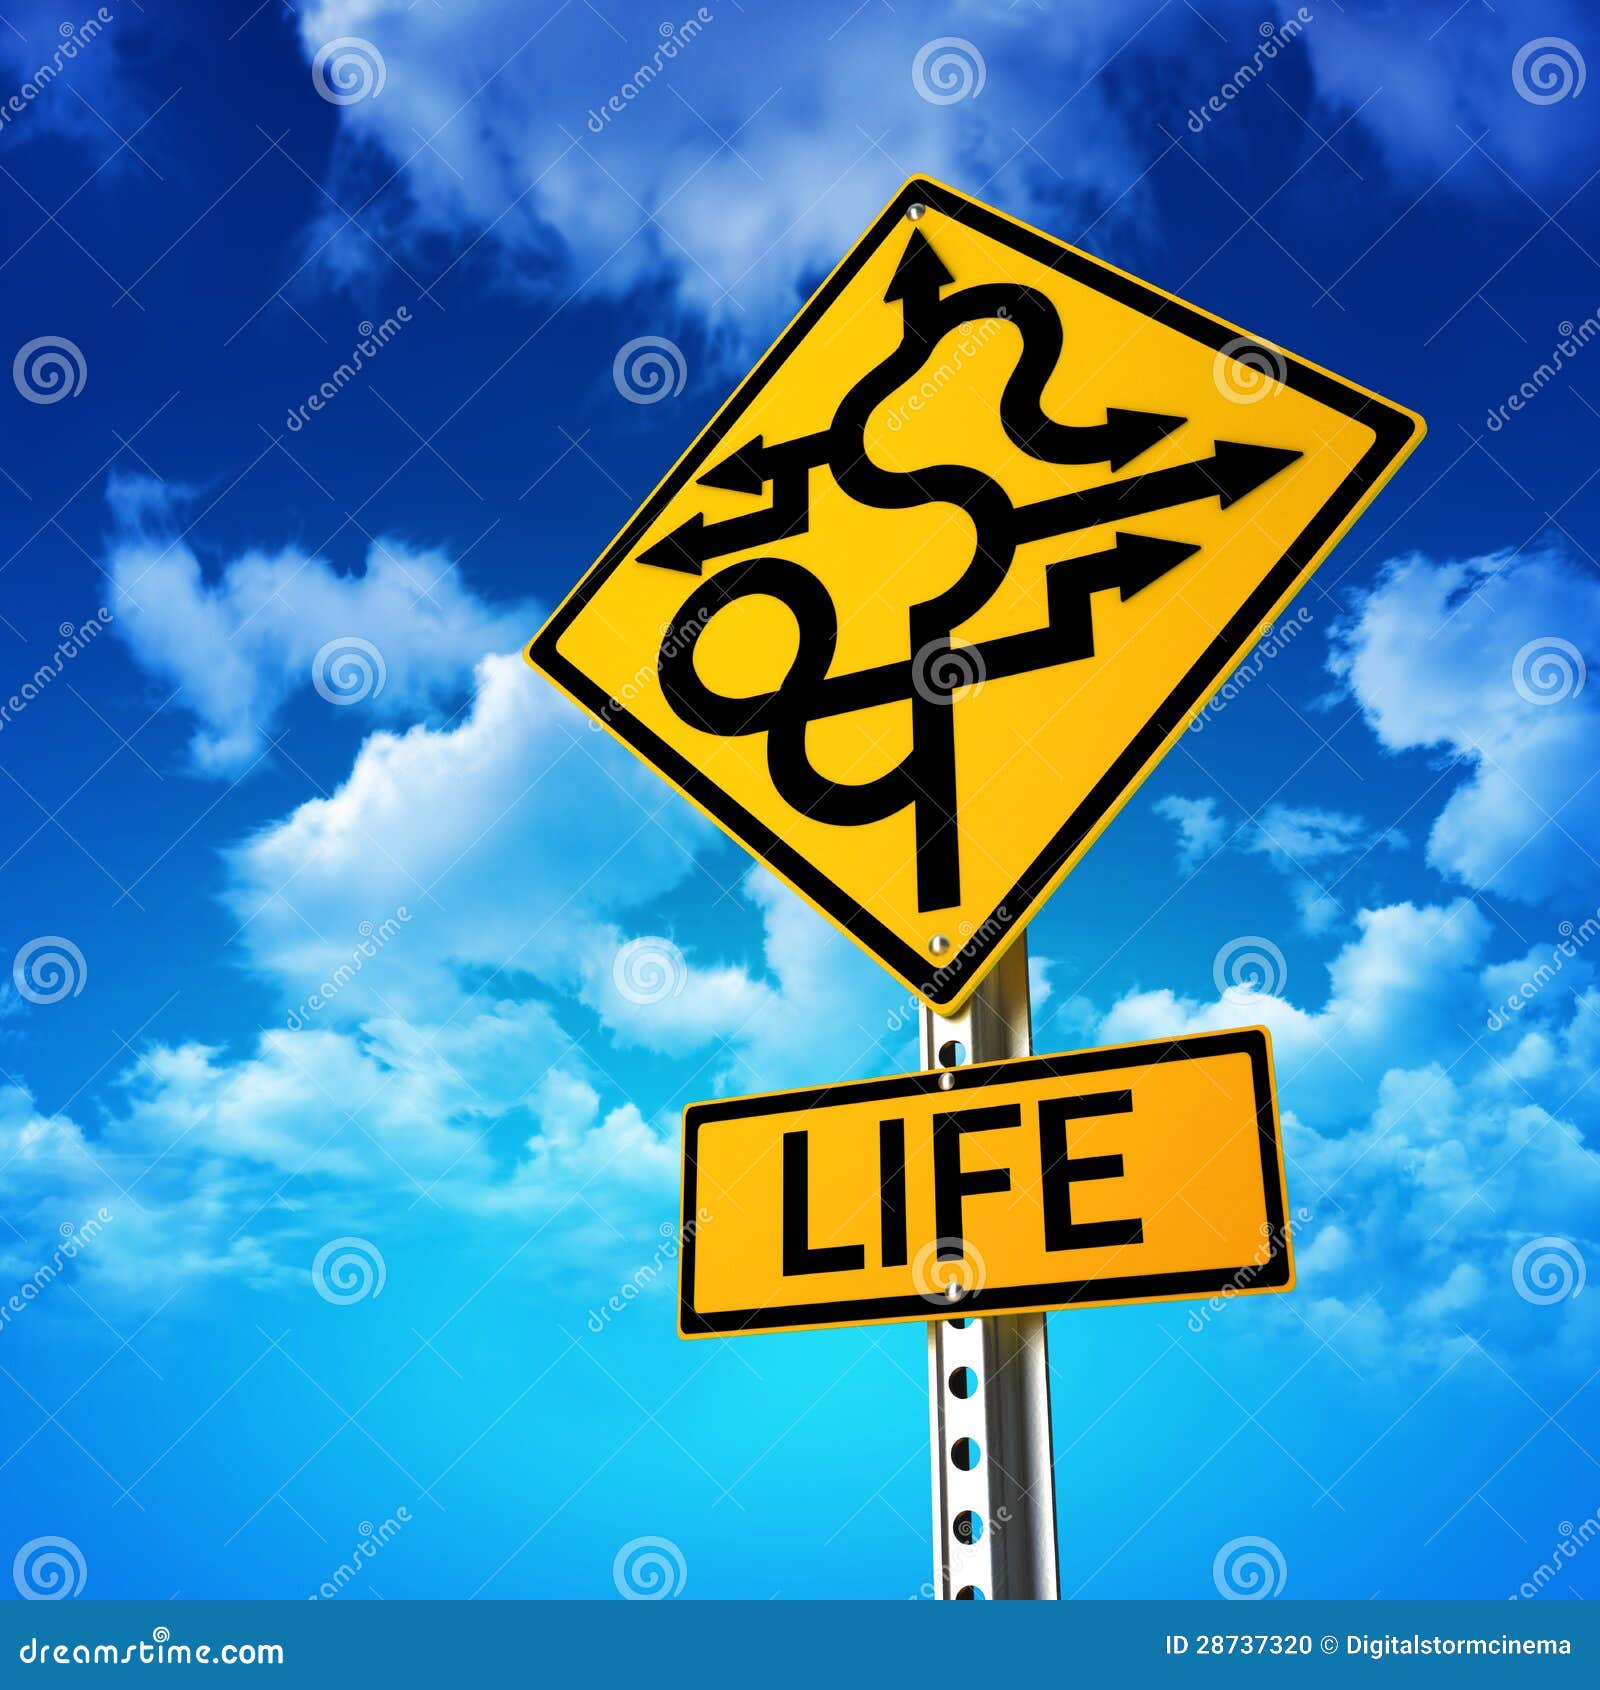 life sign